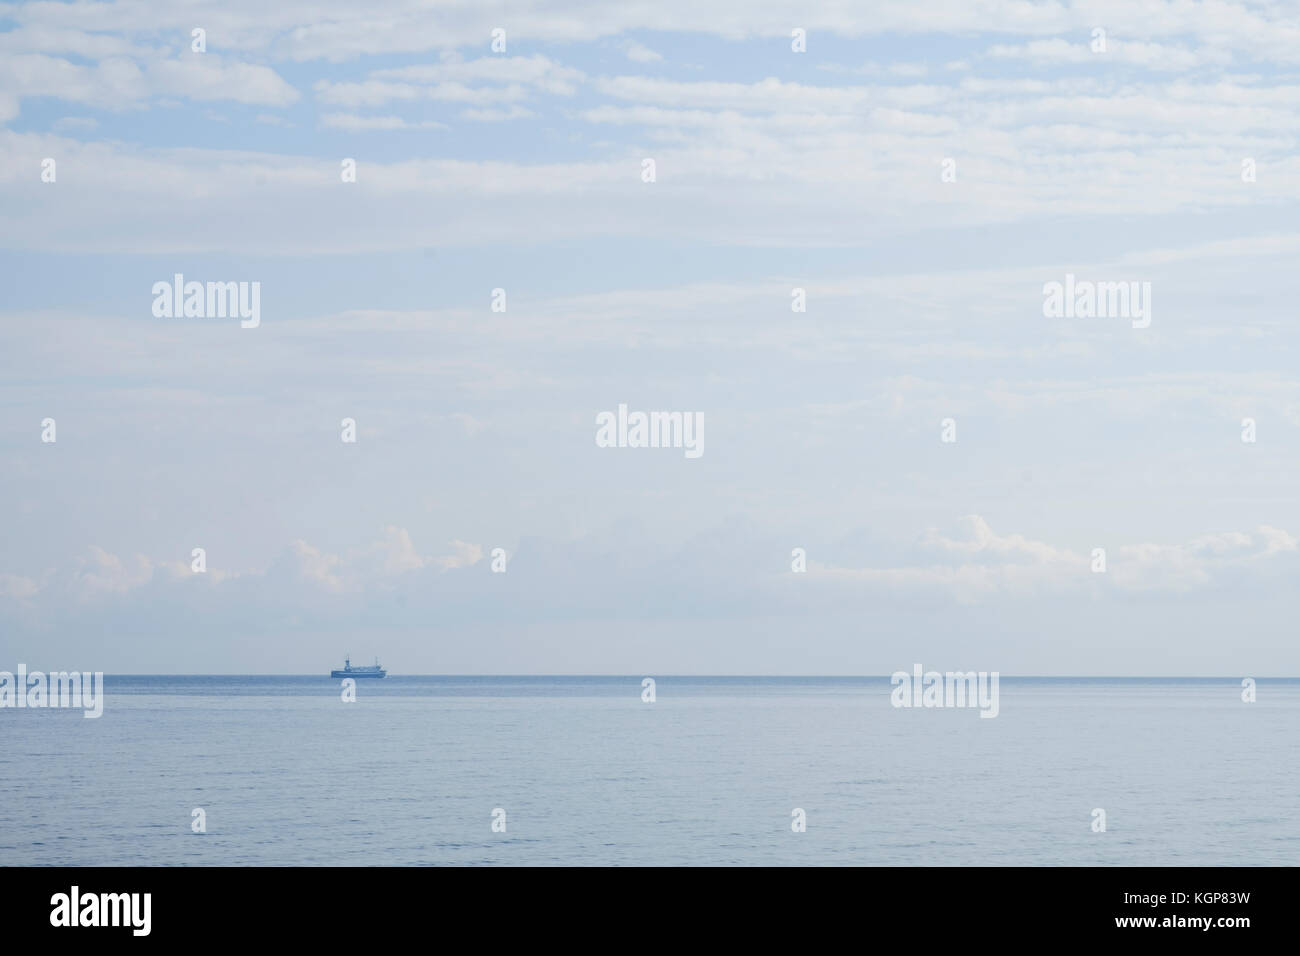 Un barco en el horizonte. El Mar Egeo. Foto de stock